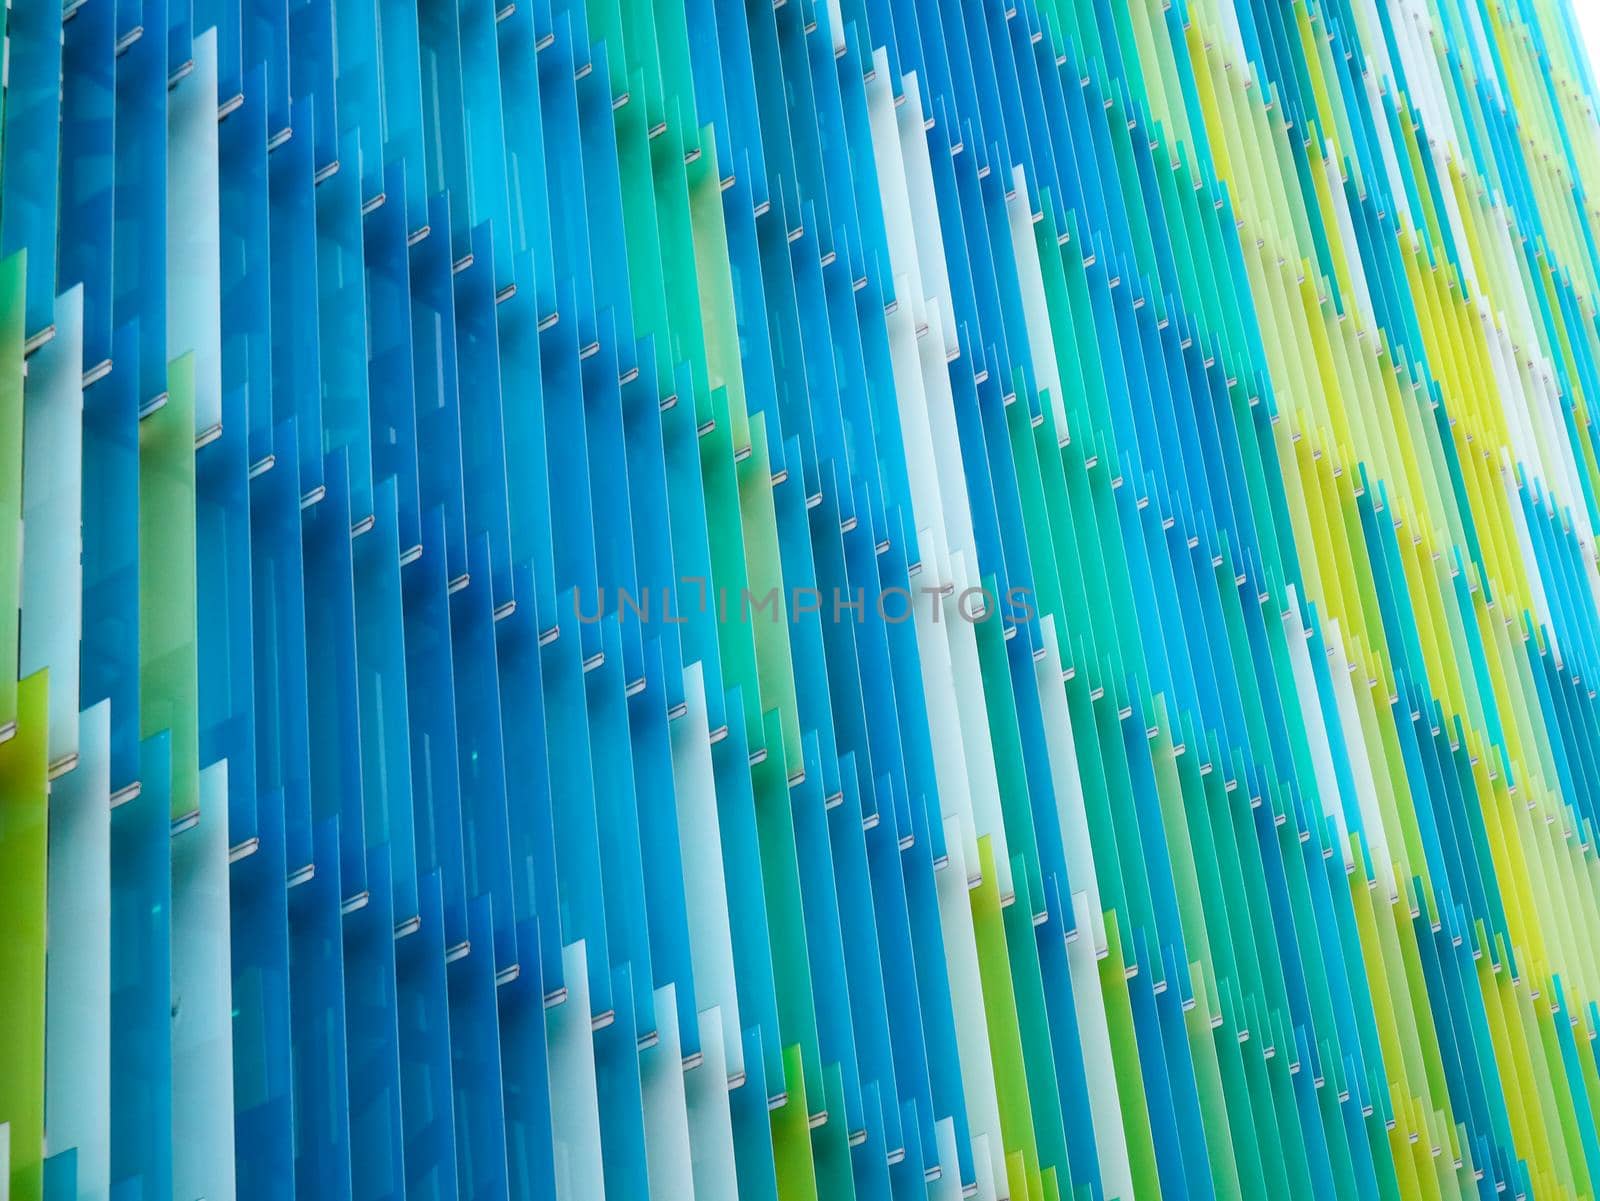 acrylic plastic sheet interior vertical color yellow blue aqua by Darkfox